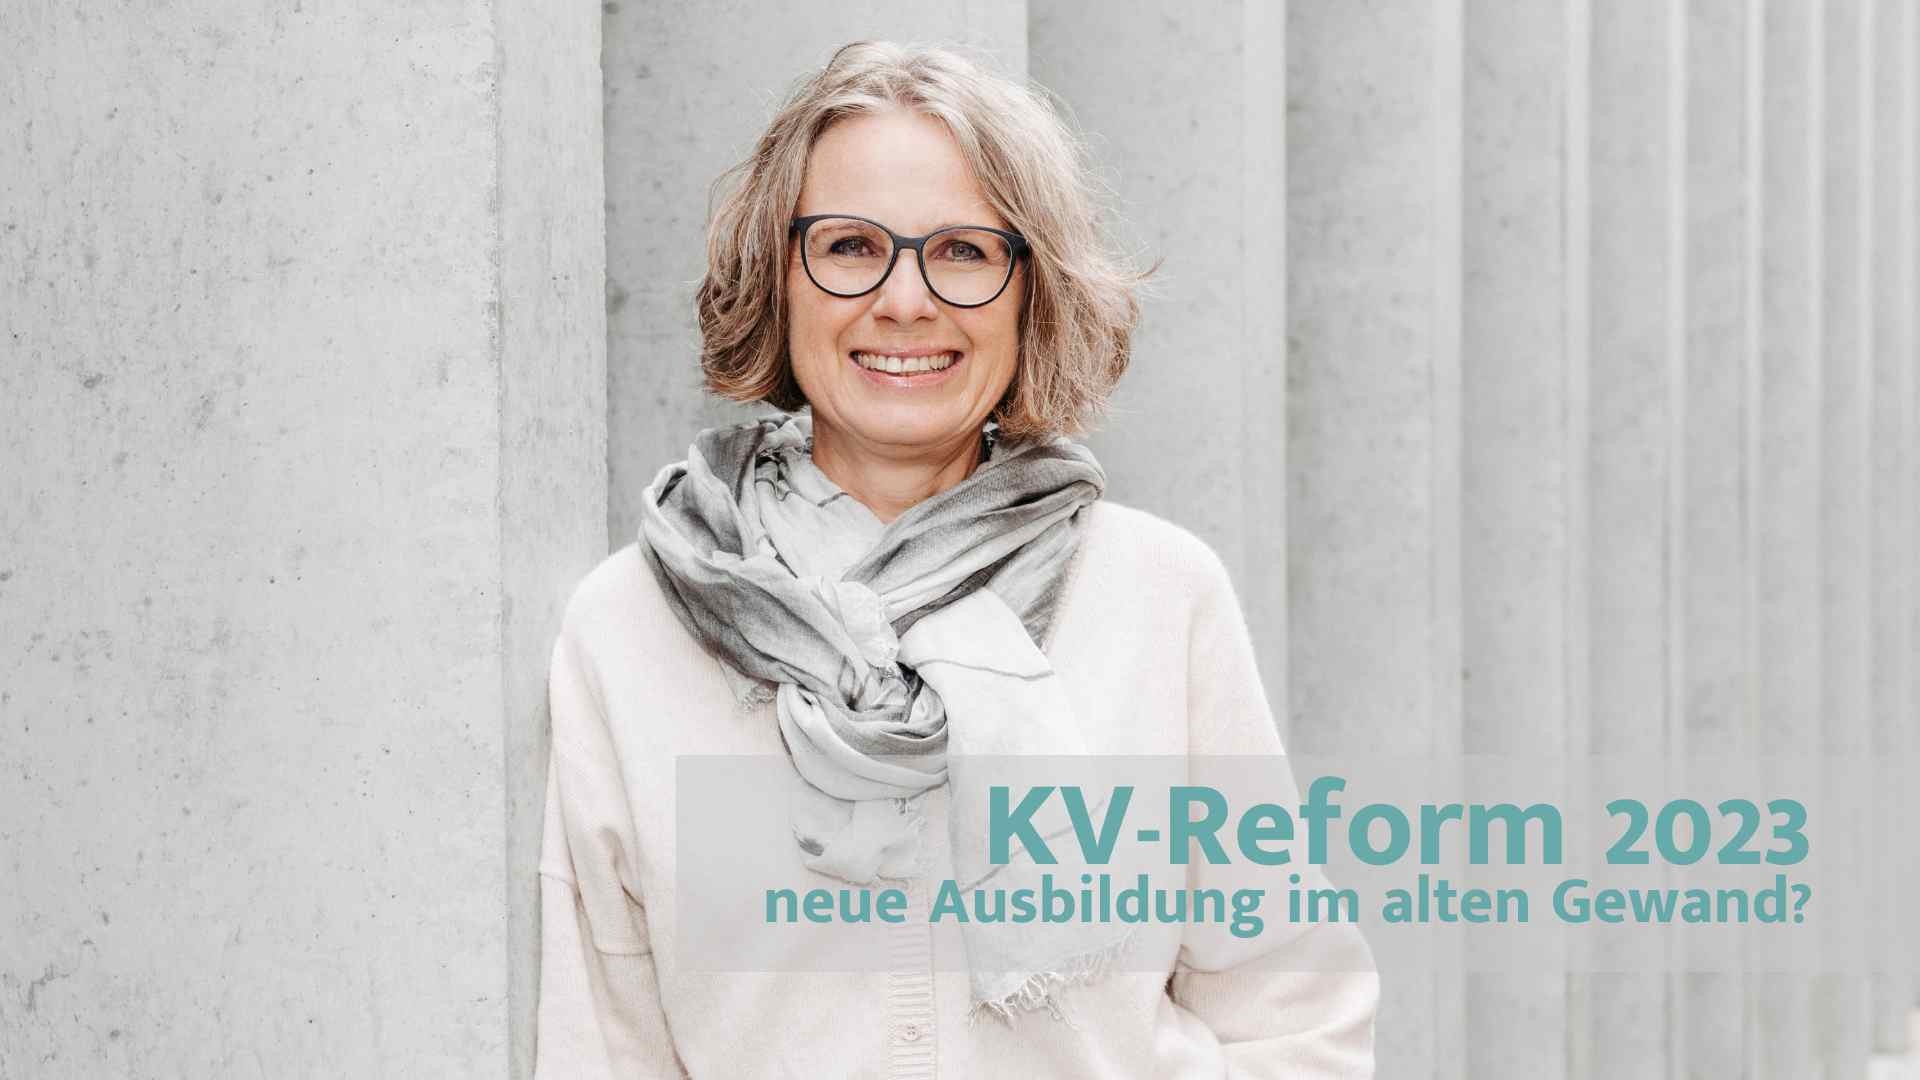 Franziska Knechtle über die KV Reform 2023